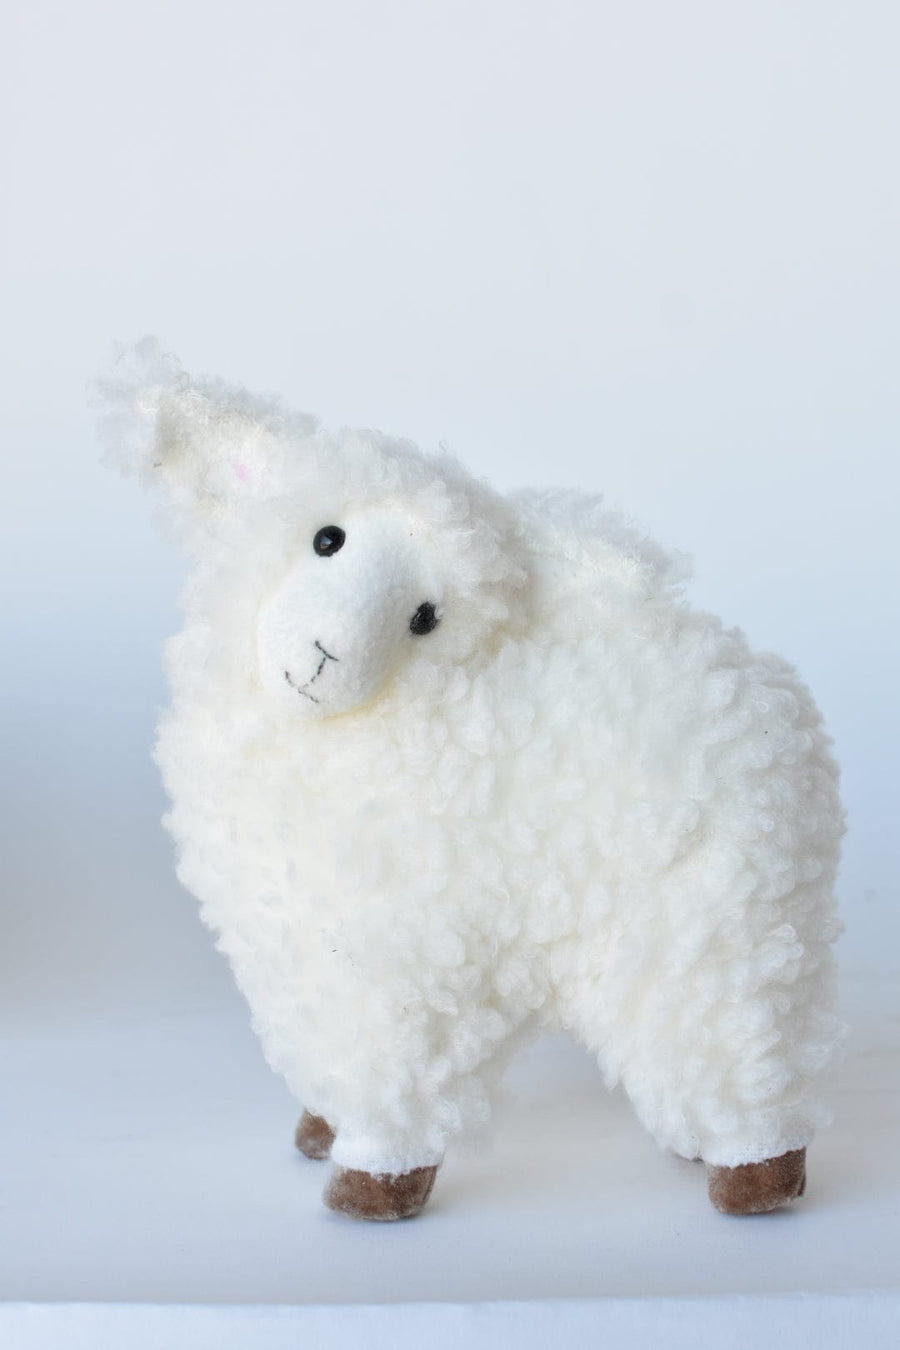 Fluffy Little Lamb Figures - Set of 2